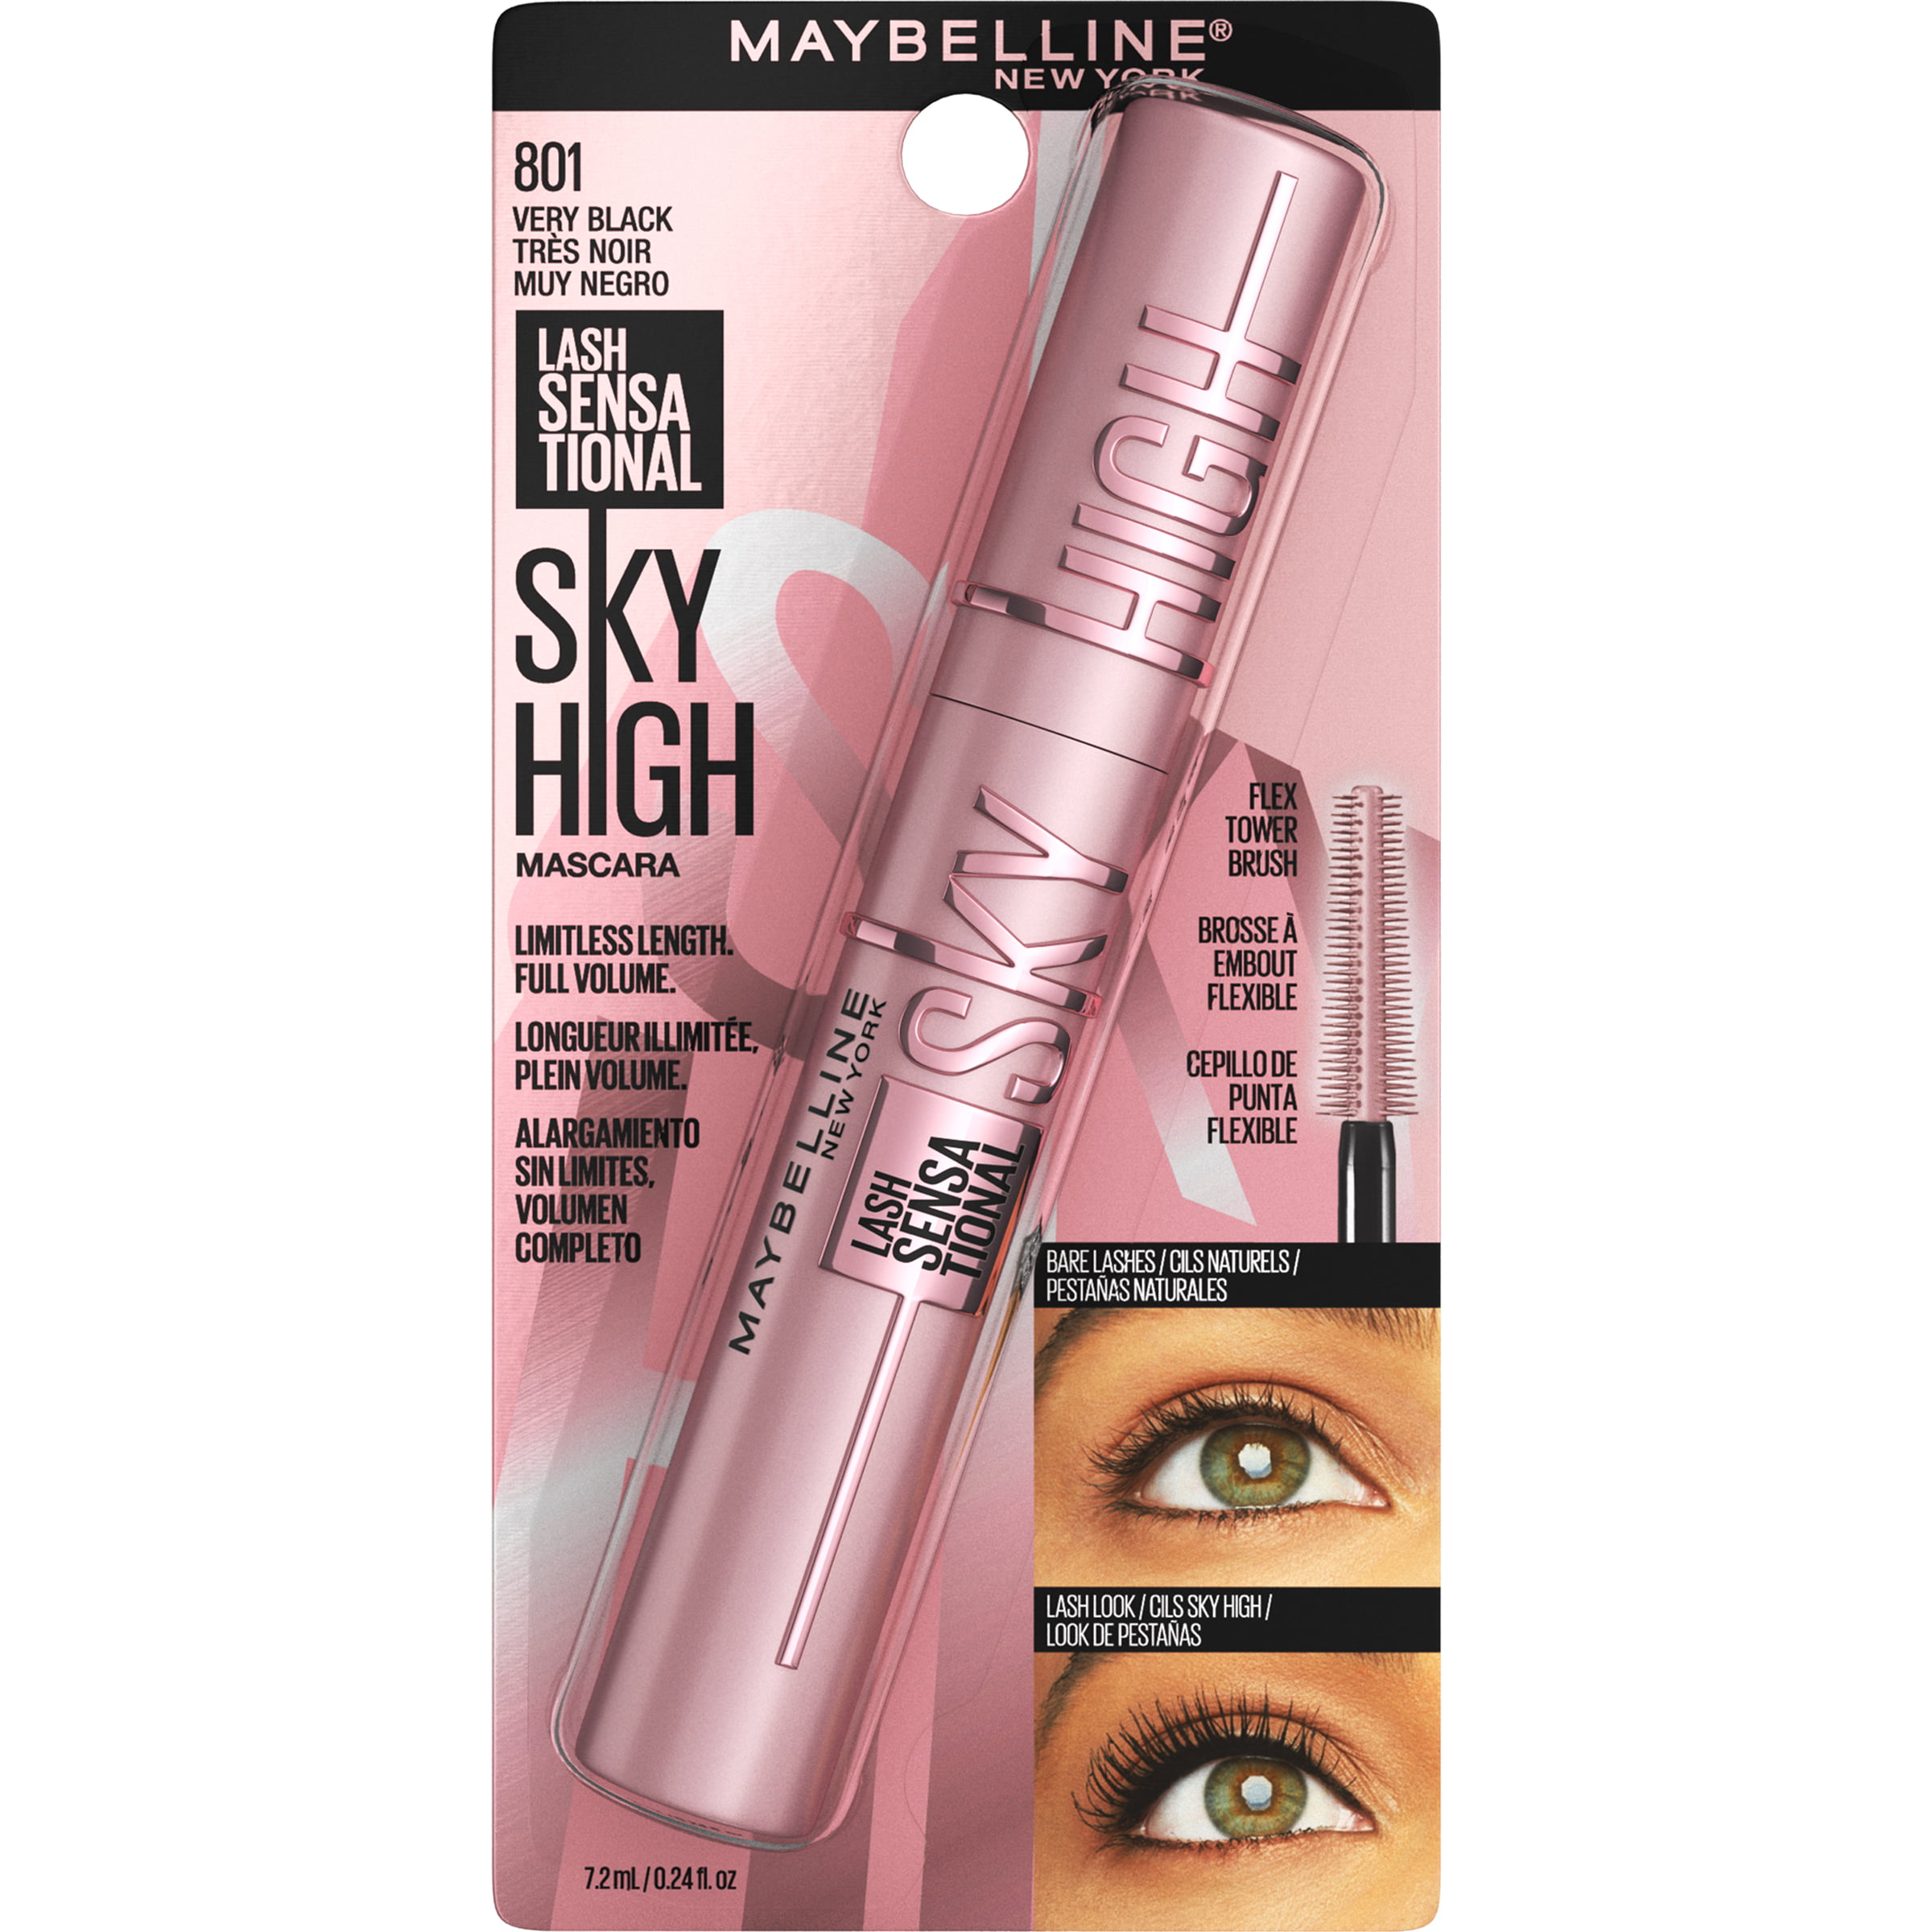 Where Can I Buy Maybelline Sky High Mascara? 2